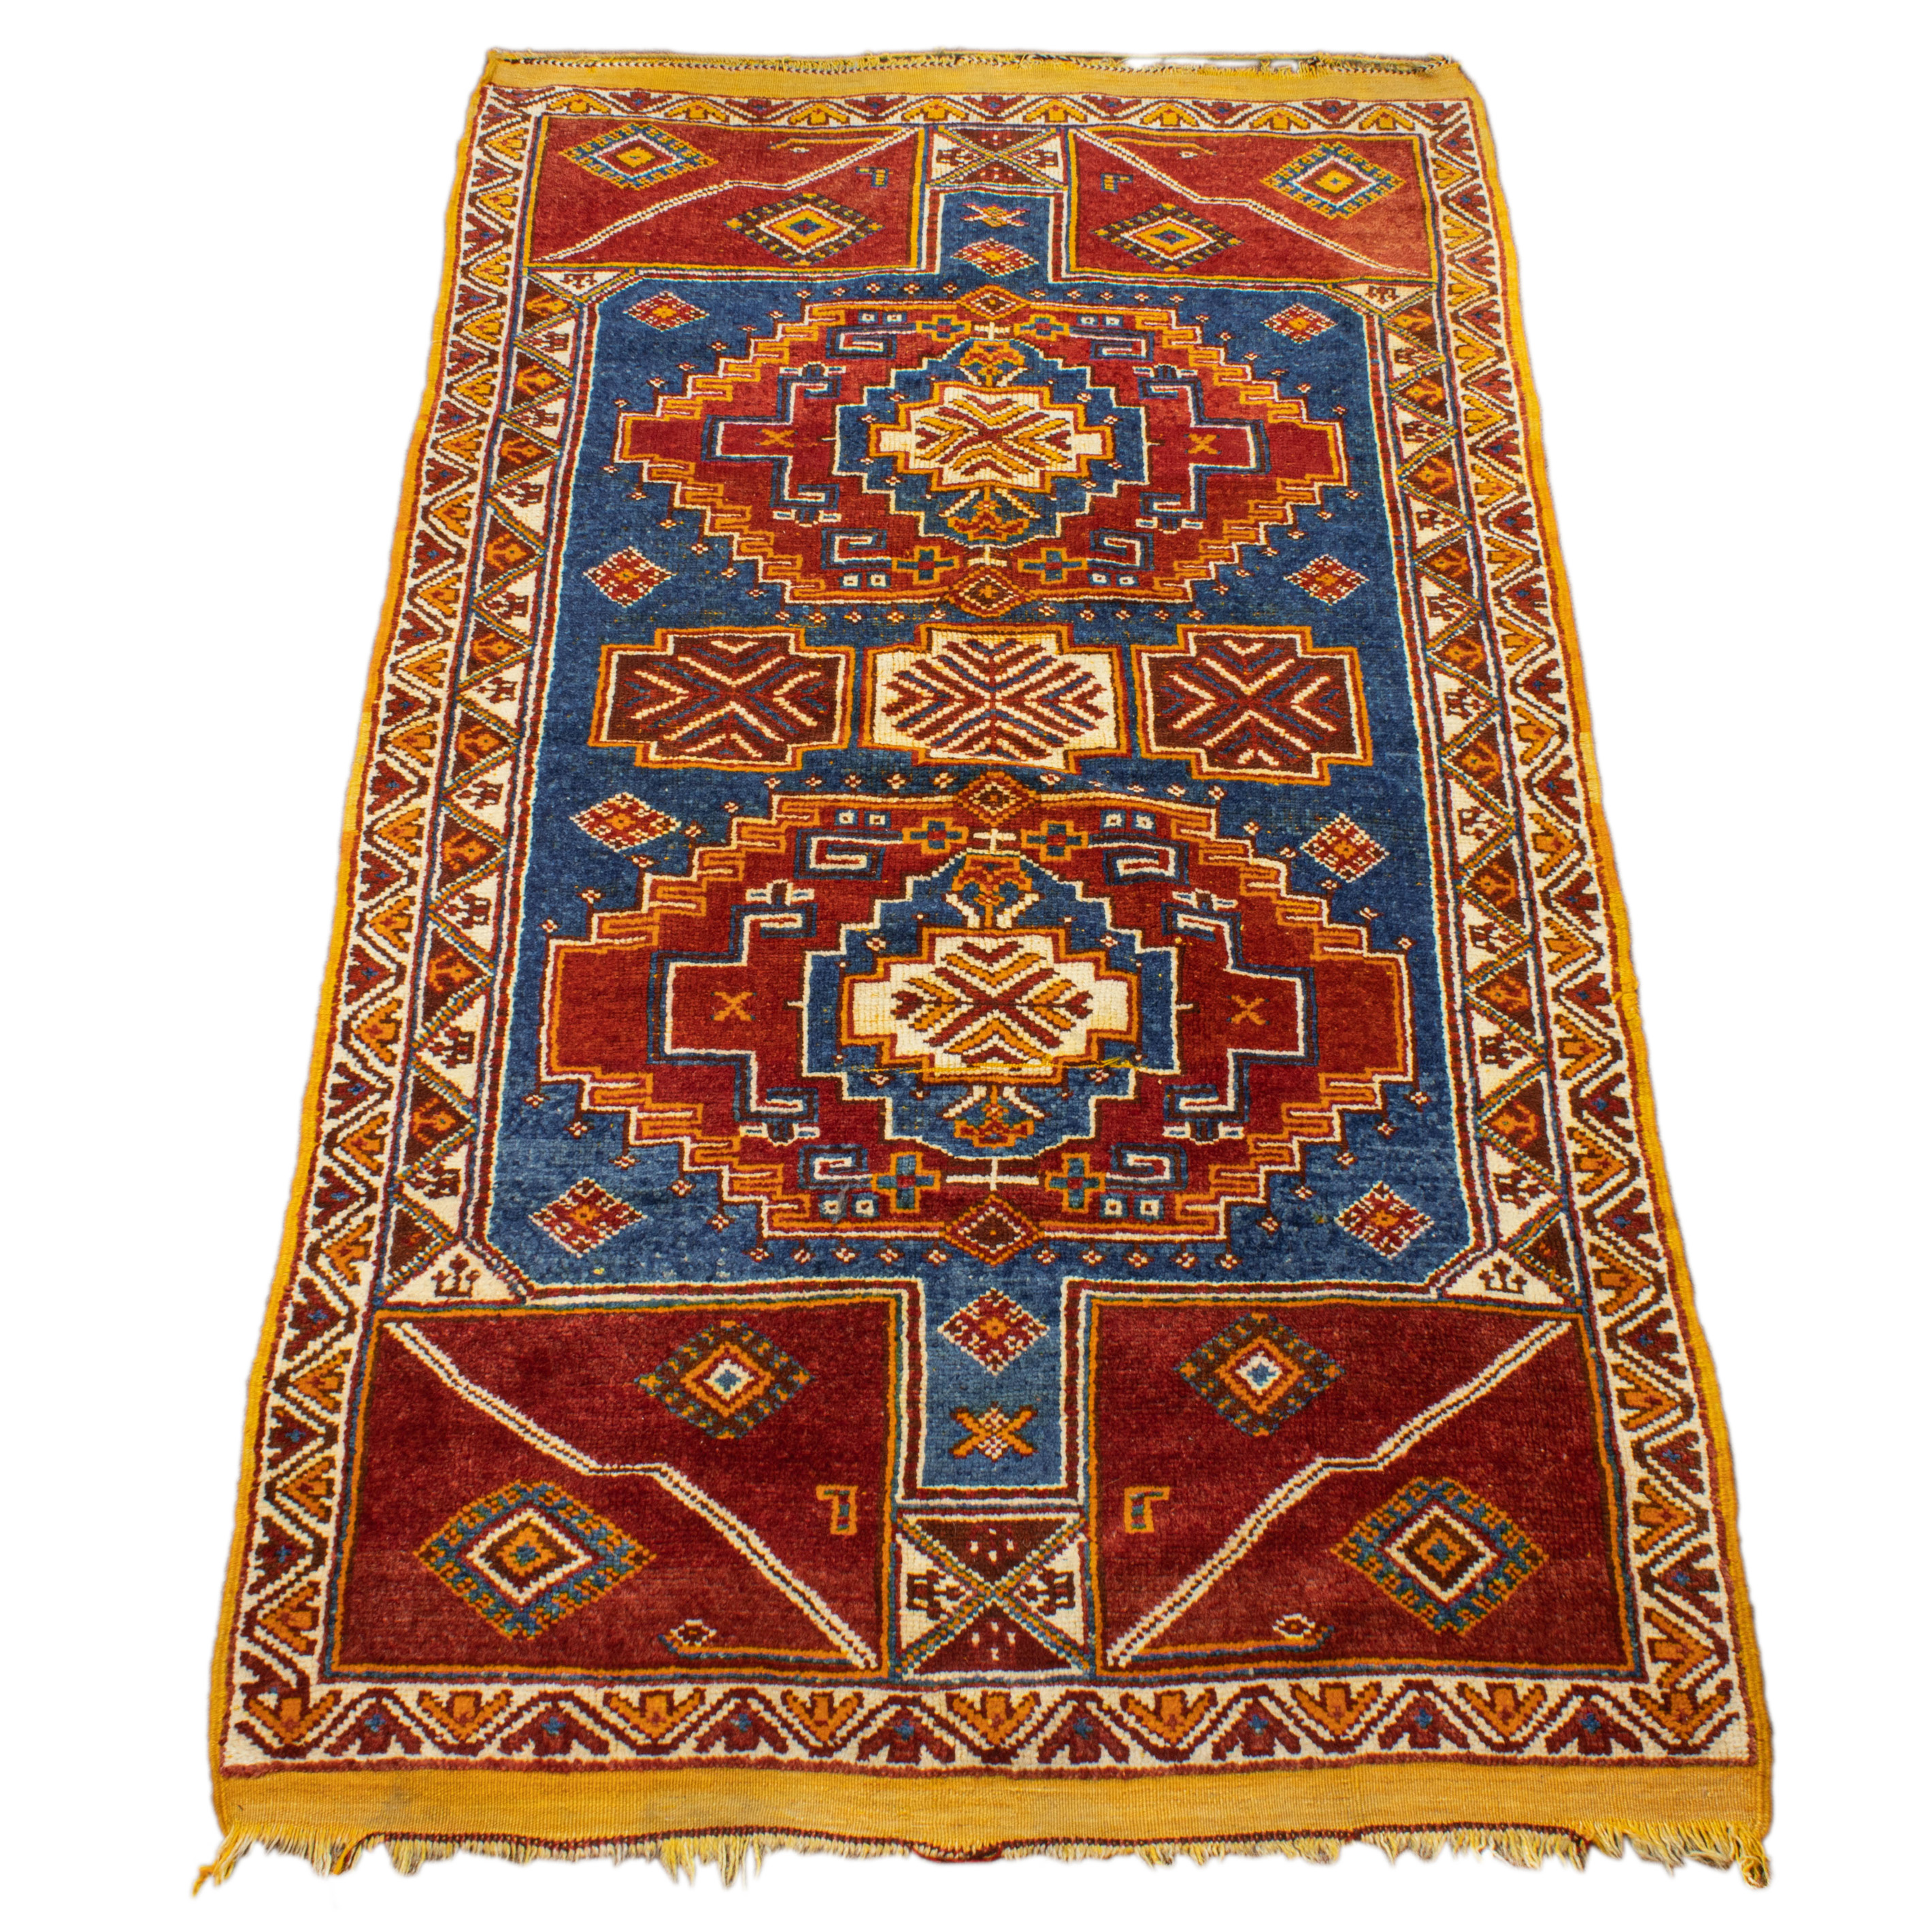 MOROCCAN CARPET Moroccan carpet,